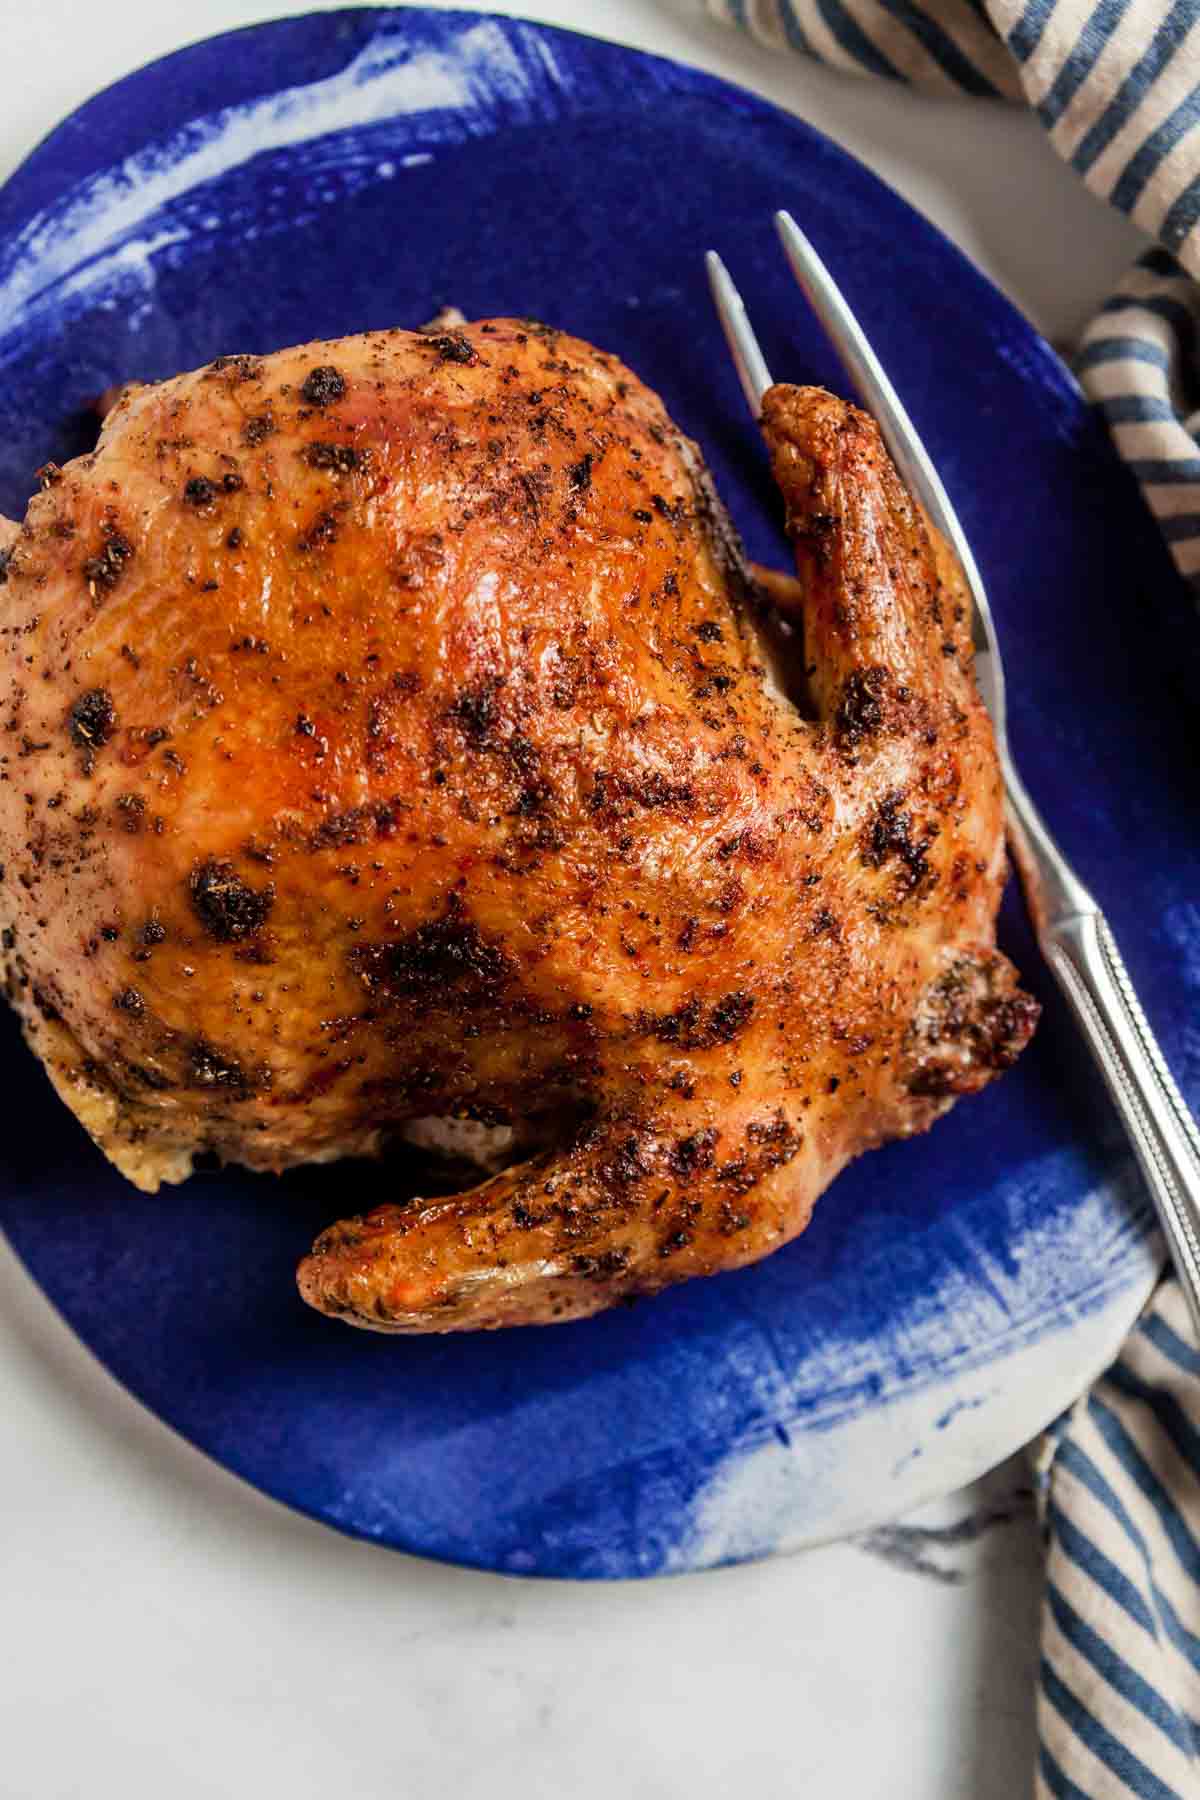 https://www.healthy-delicious.com/wp-content/uploads/2021/10/air-fryer-roast-chicken-4.jpg